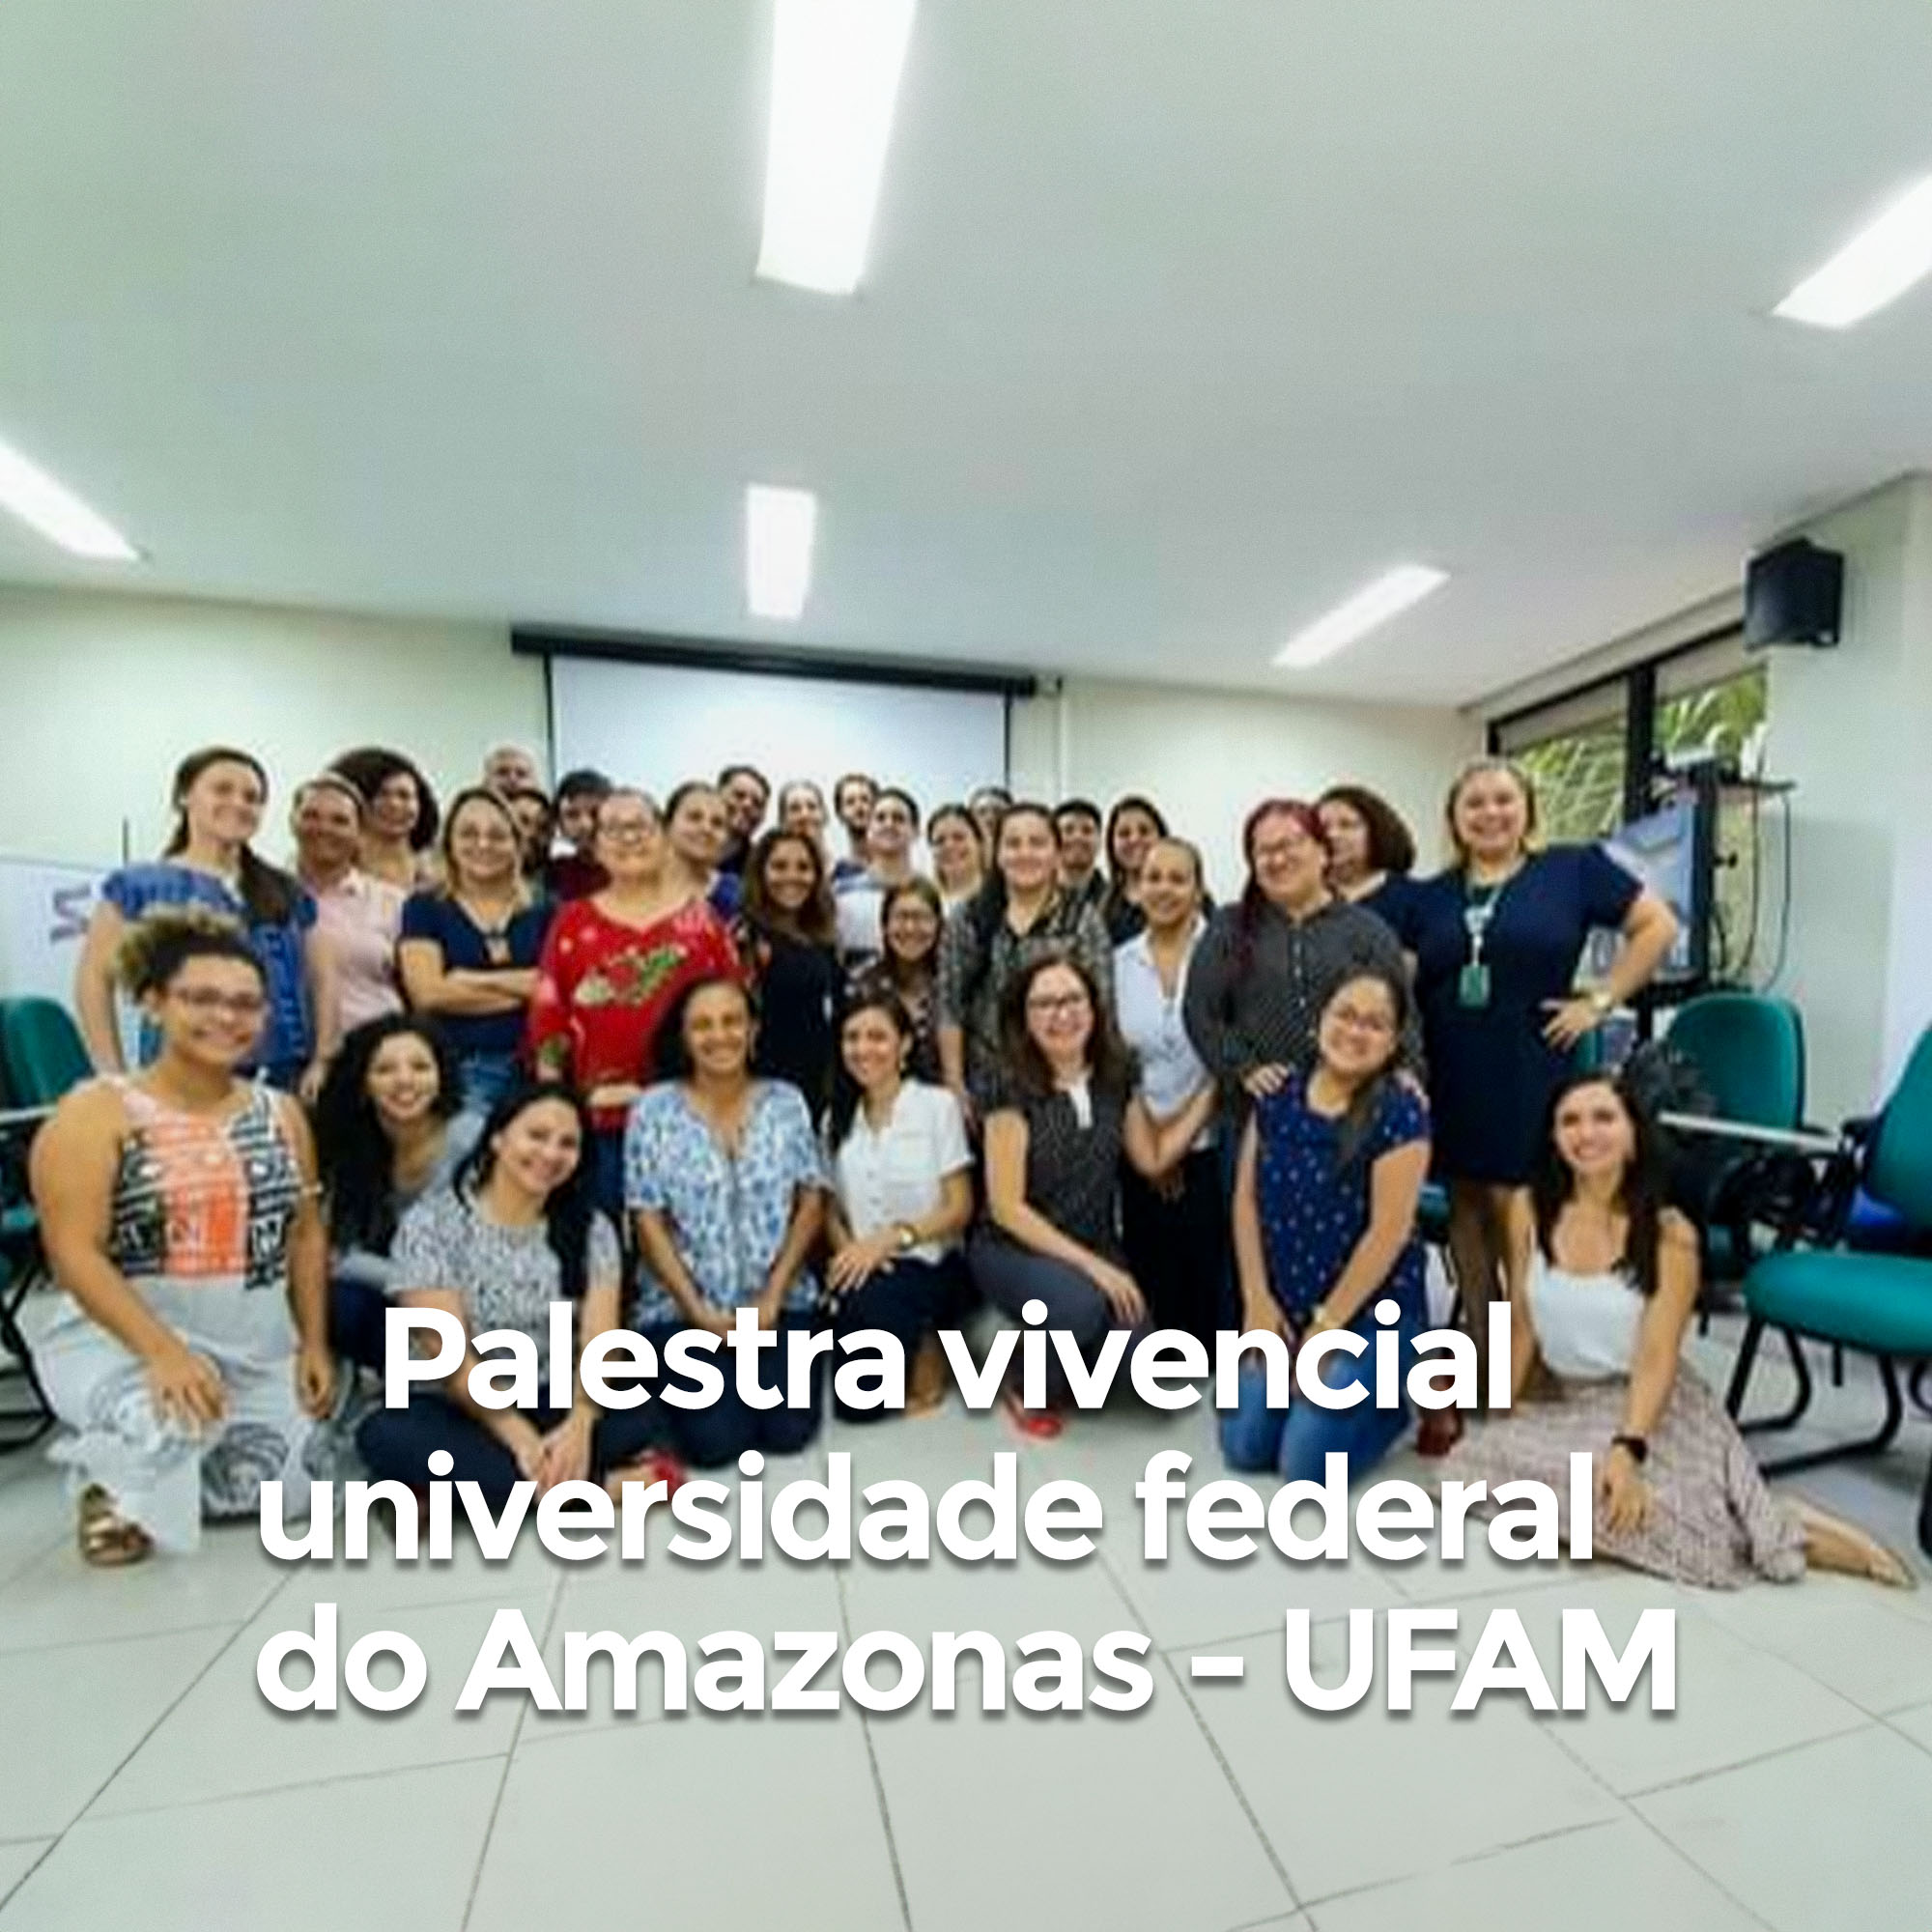 Palestra vivencial universidade federal do Amazonas - UFAM